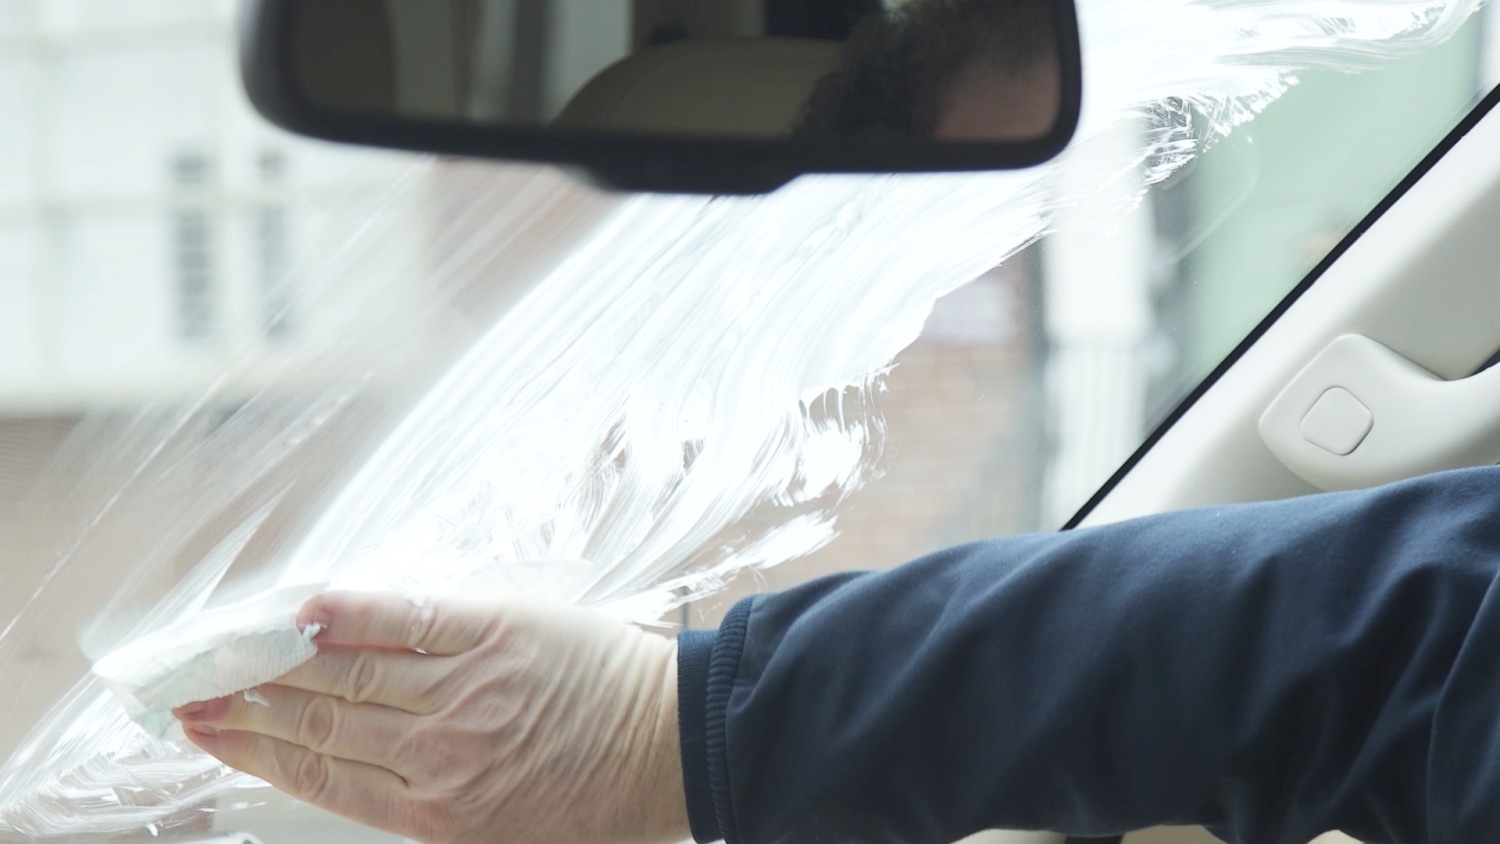 How to Clean Inside Car Windows (DIY)